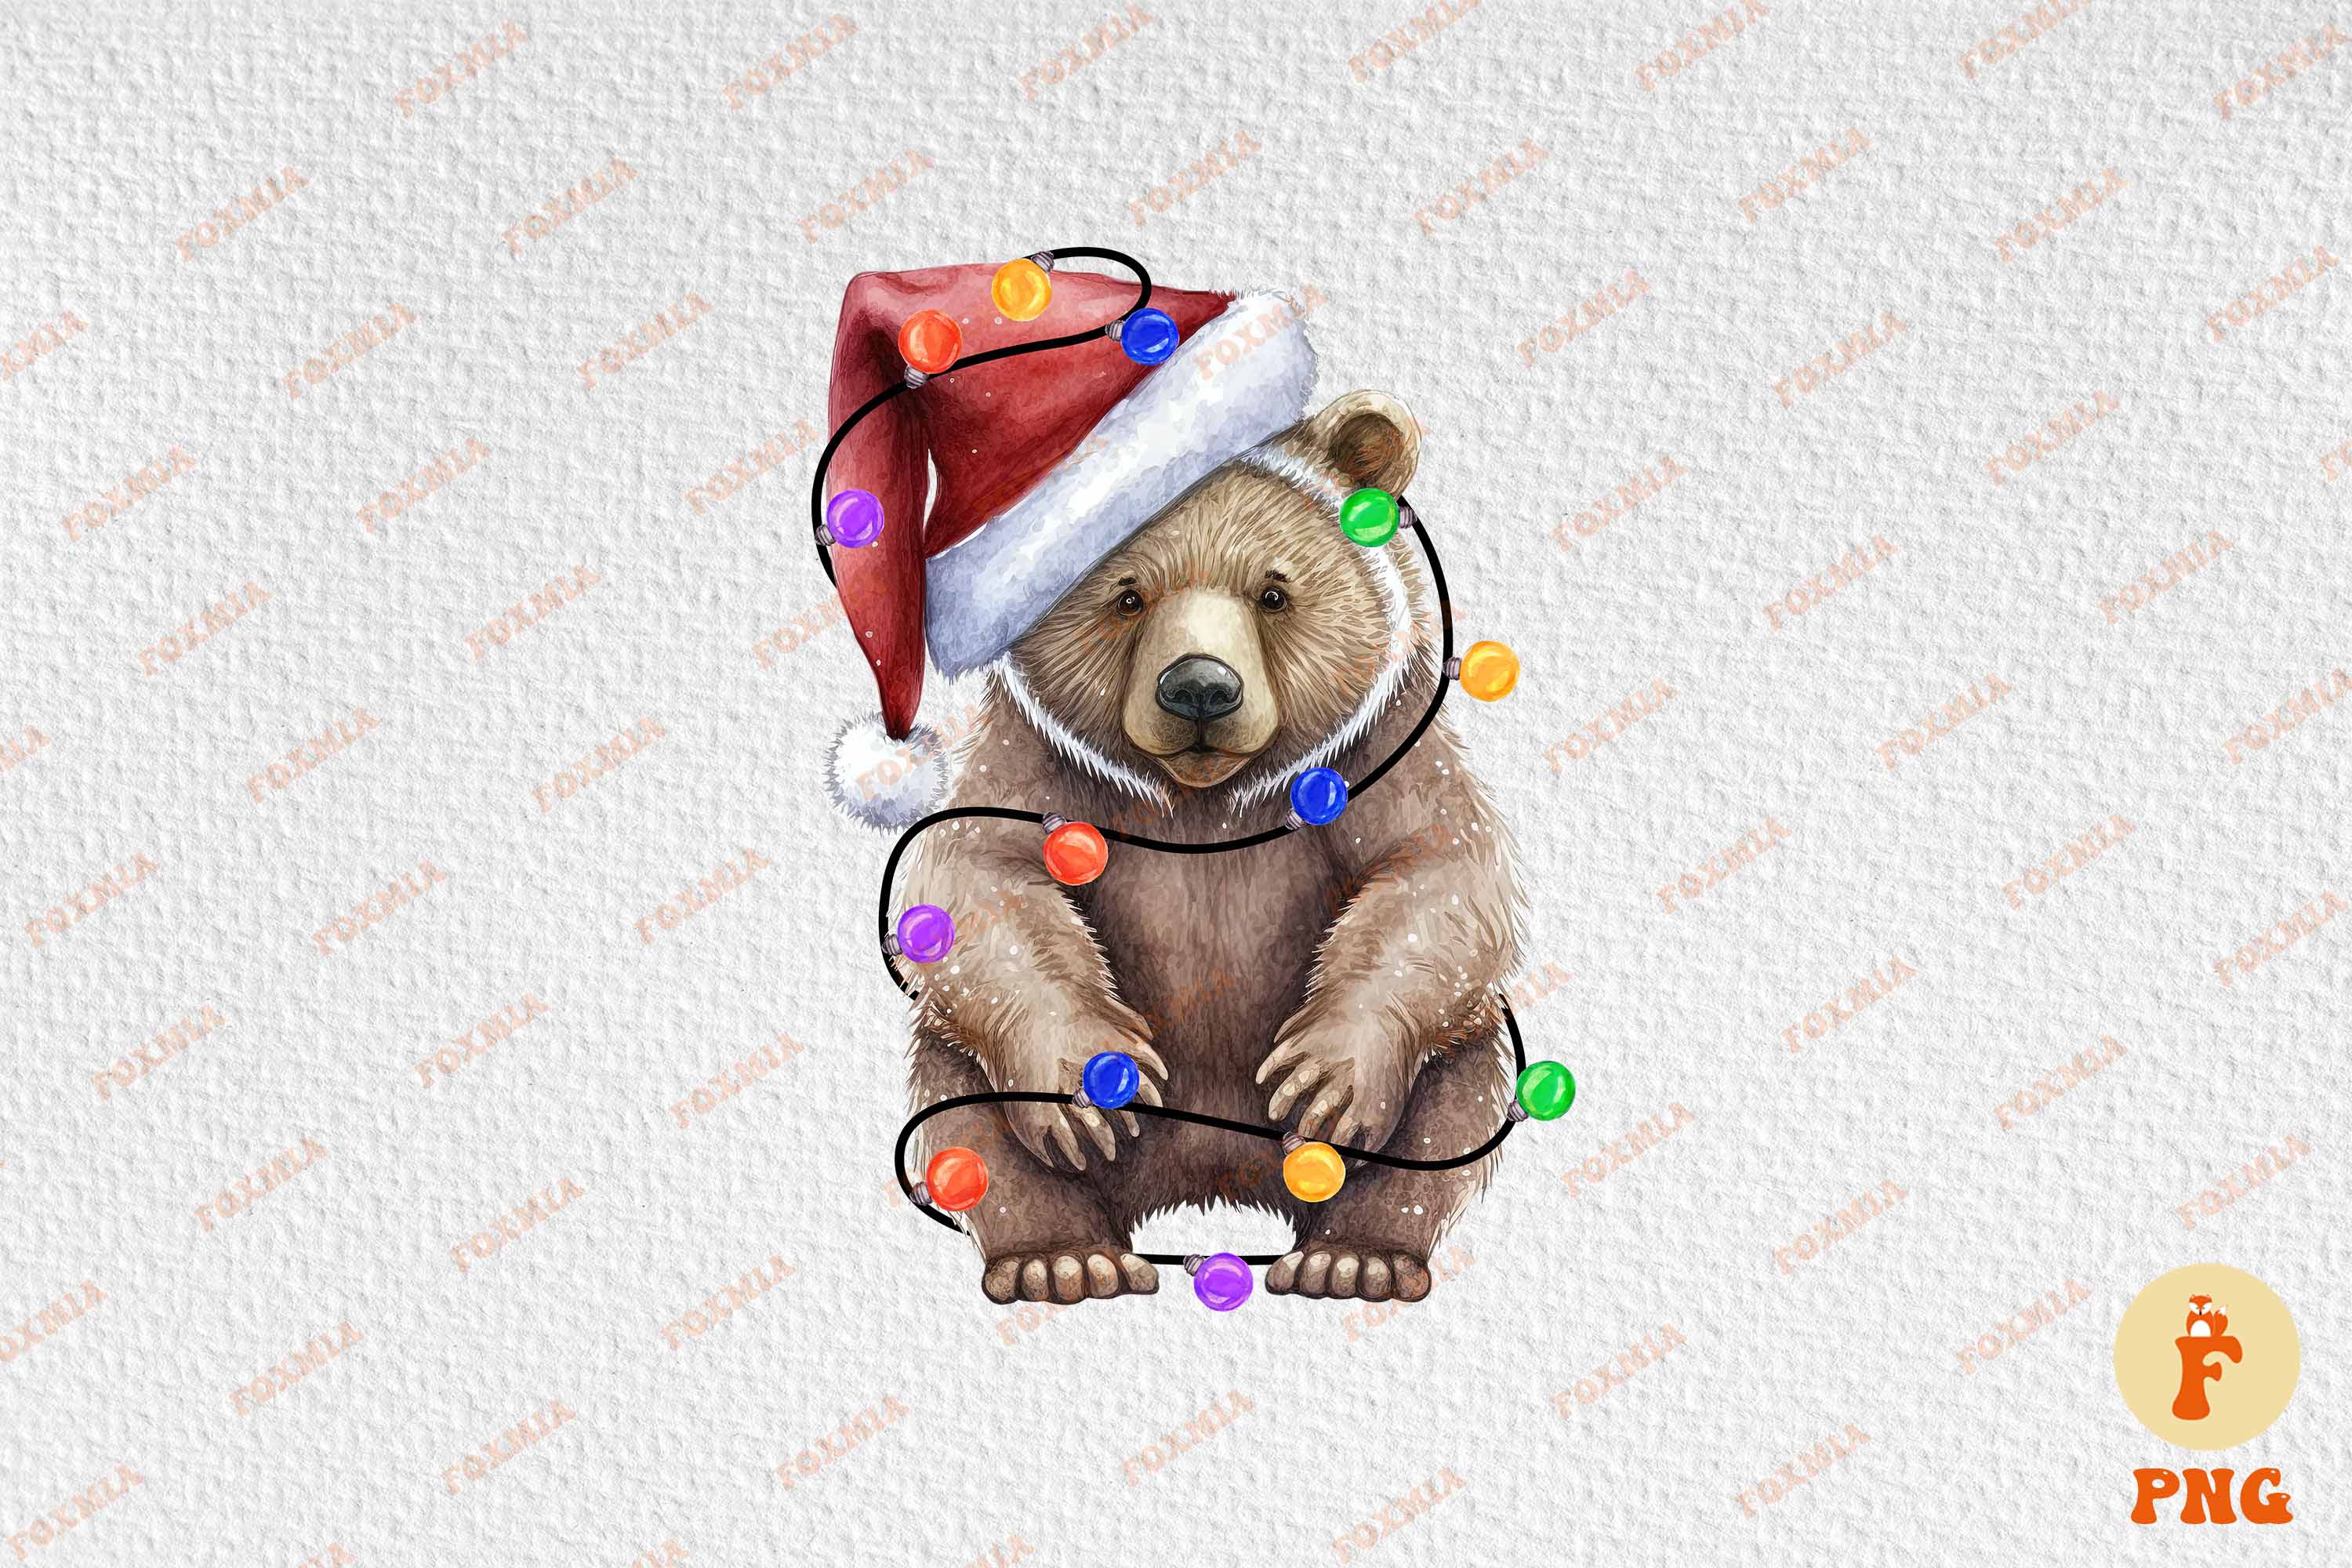 Beautiful image of a bear in a santa hat.